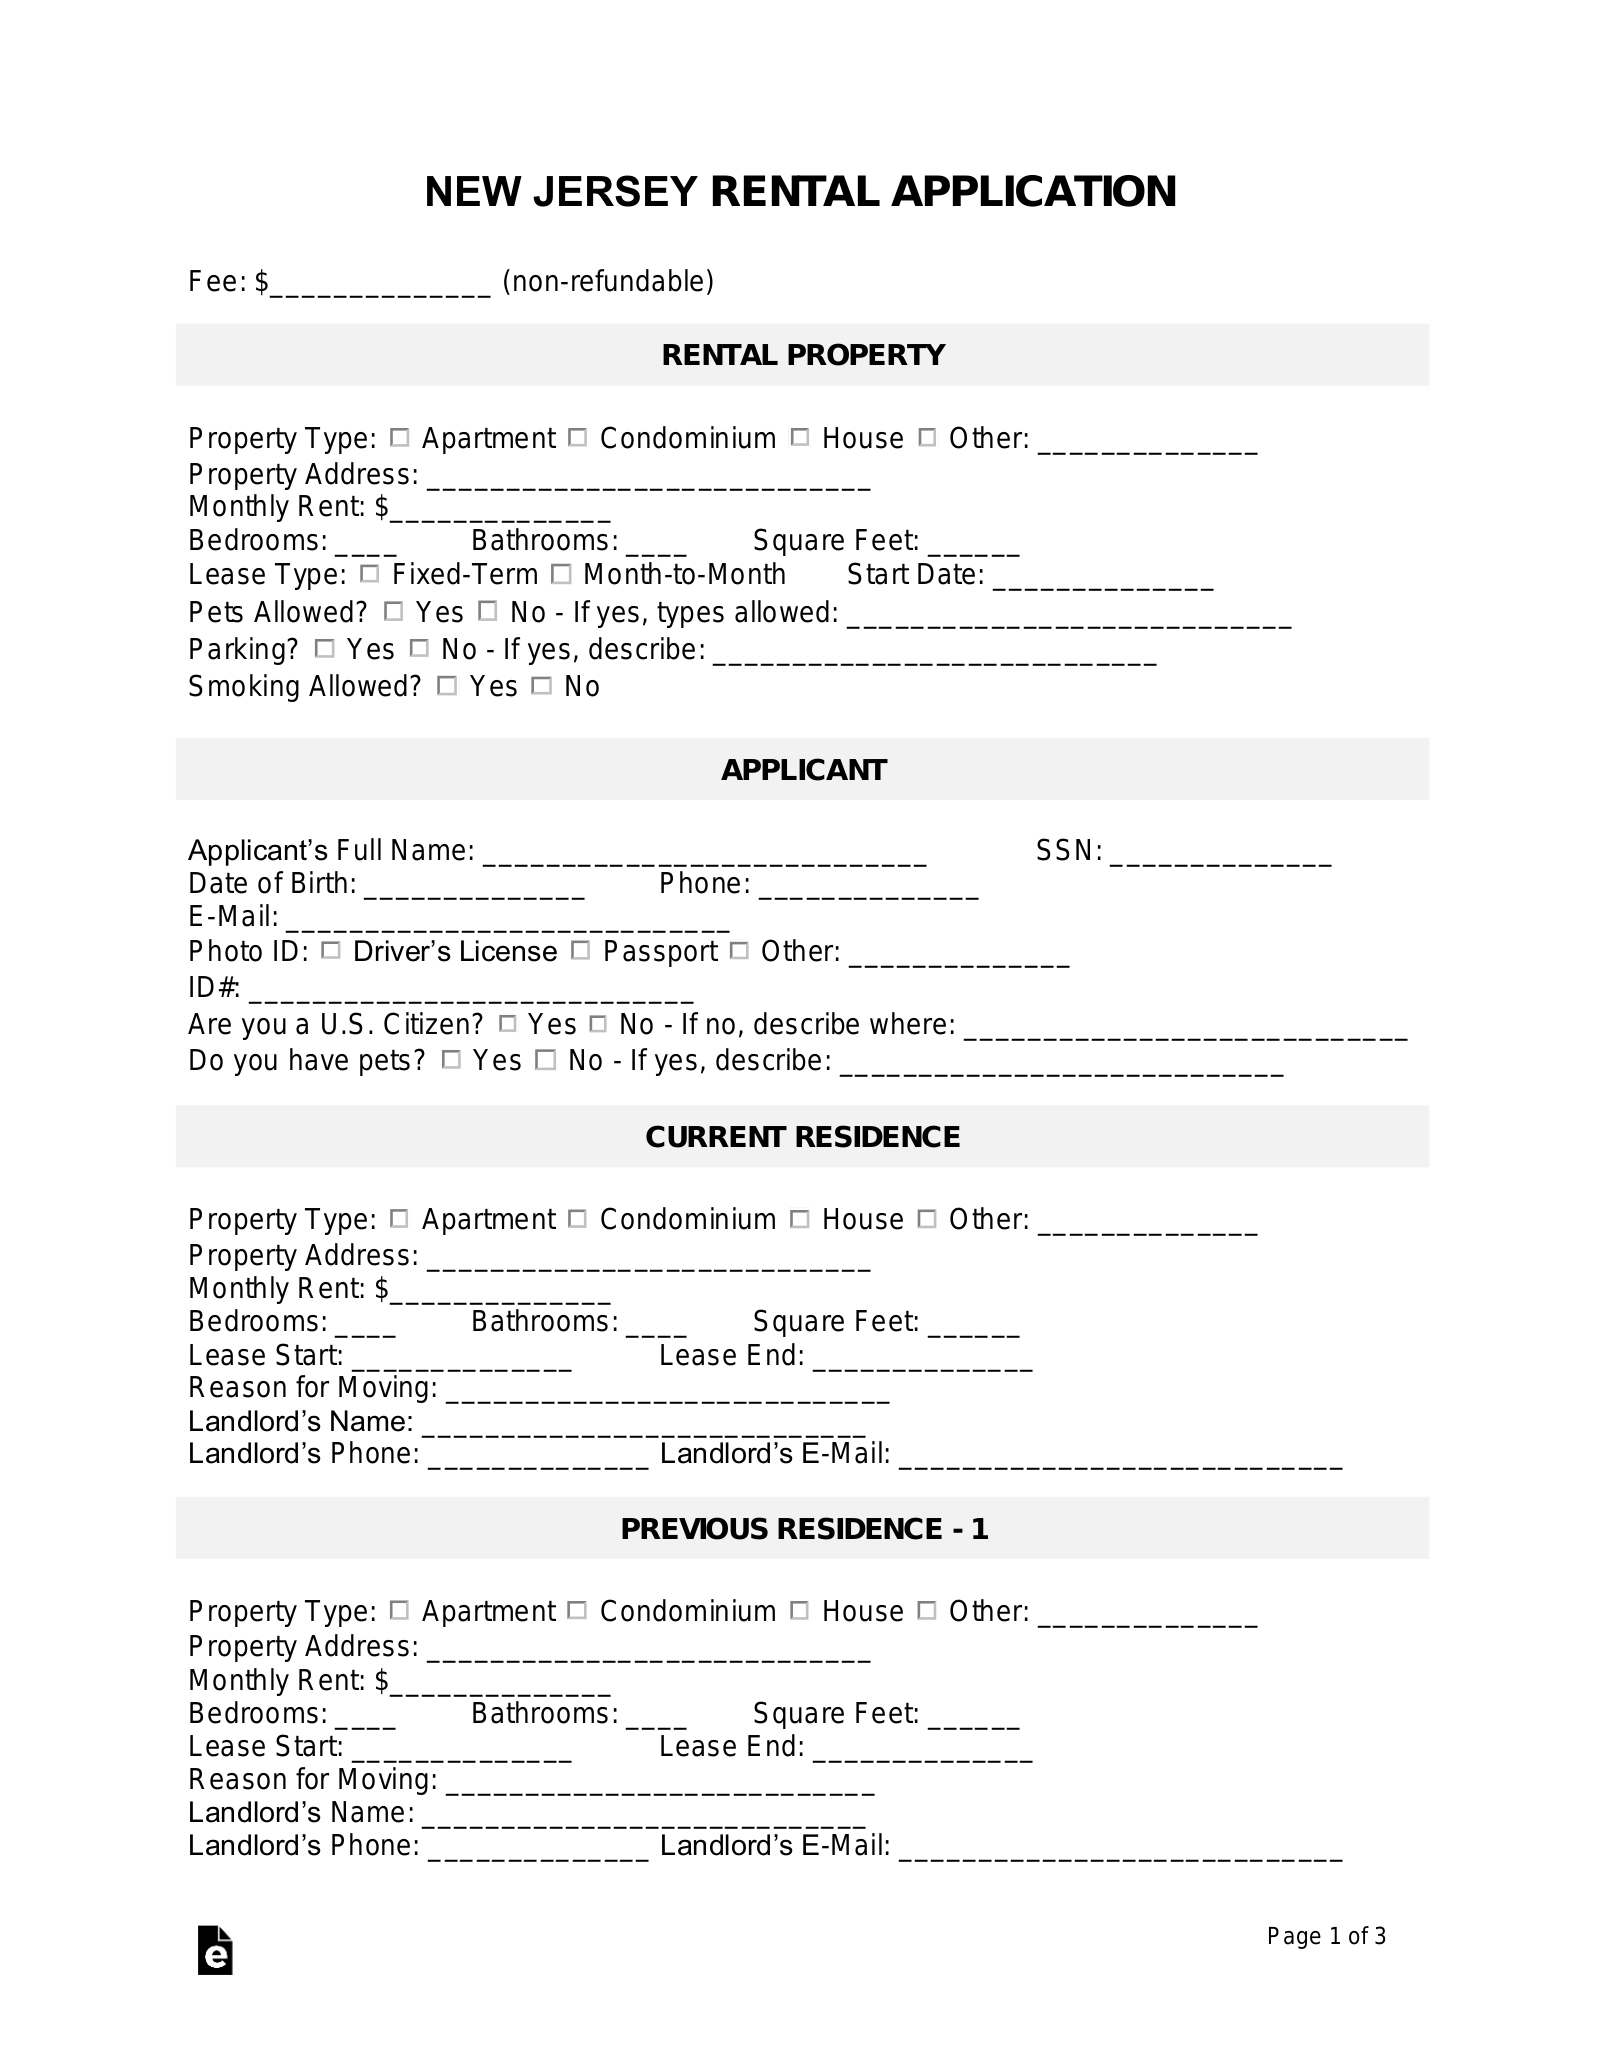 Free New Jersey Rental Application Form Word PDF EForms